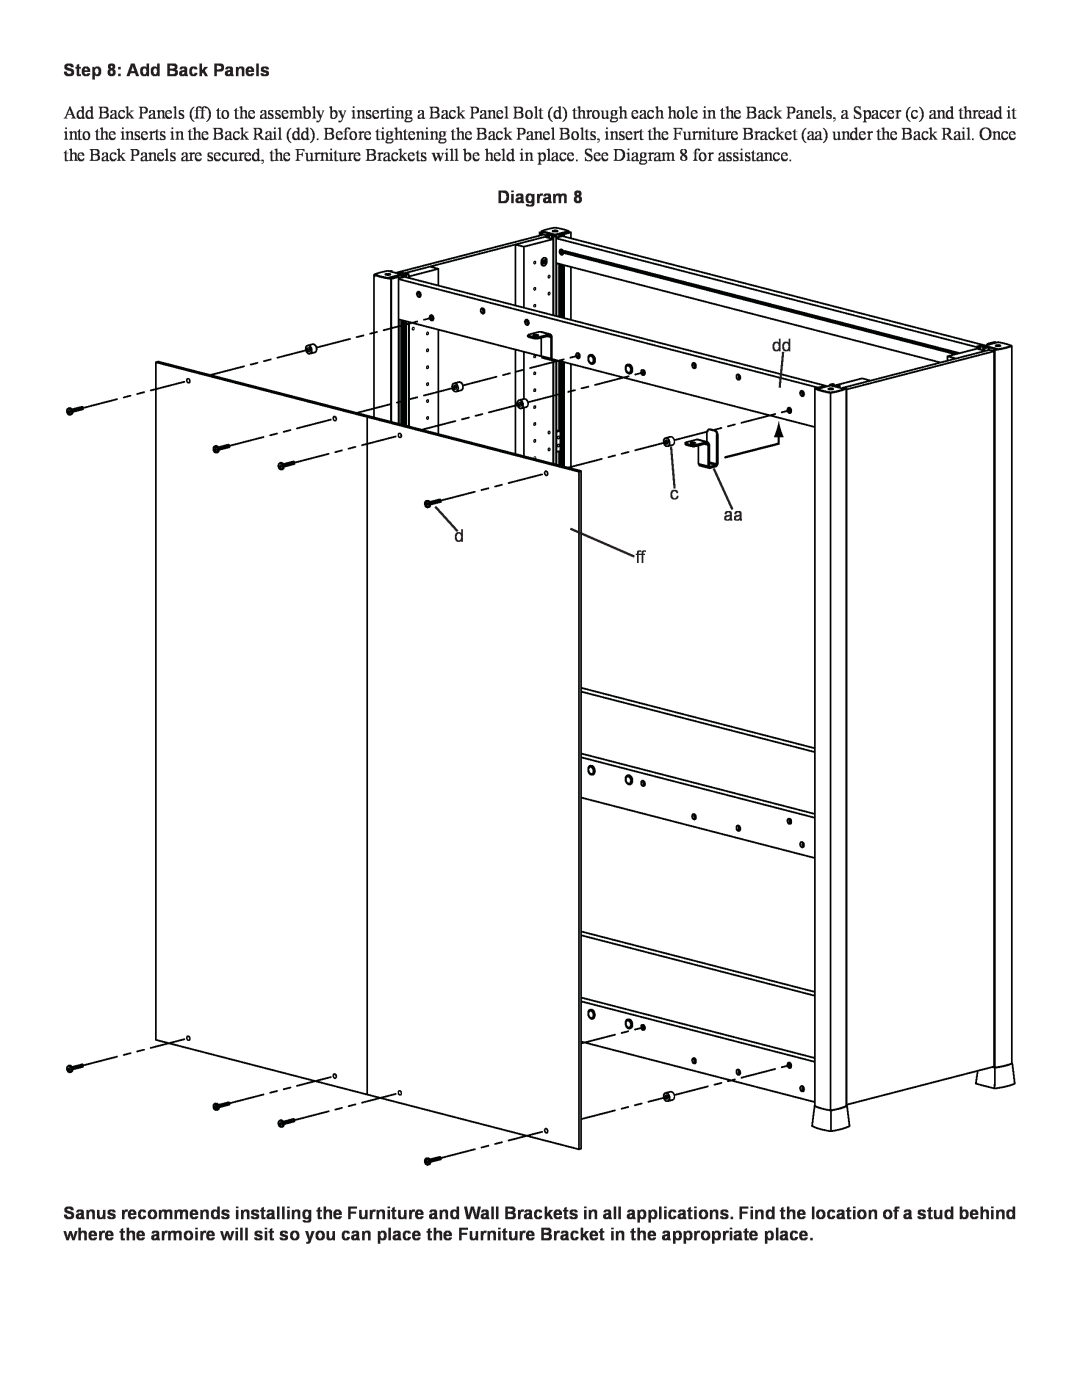 Sanus Systems CFAR47 manual Add Back Panels, dd c aa d ff, Diagram 